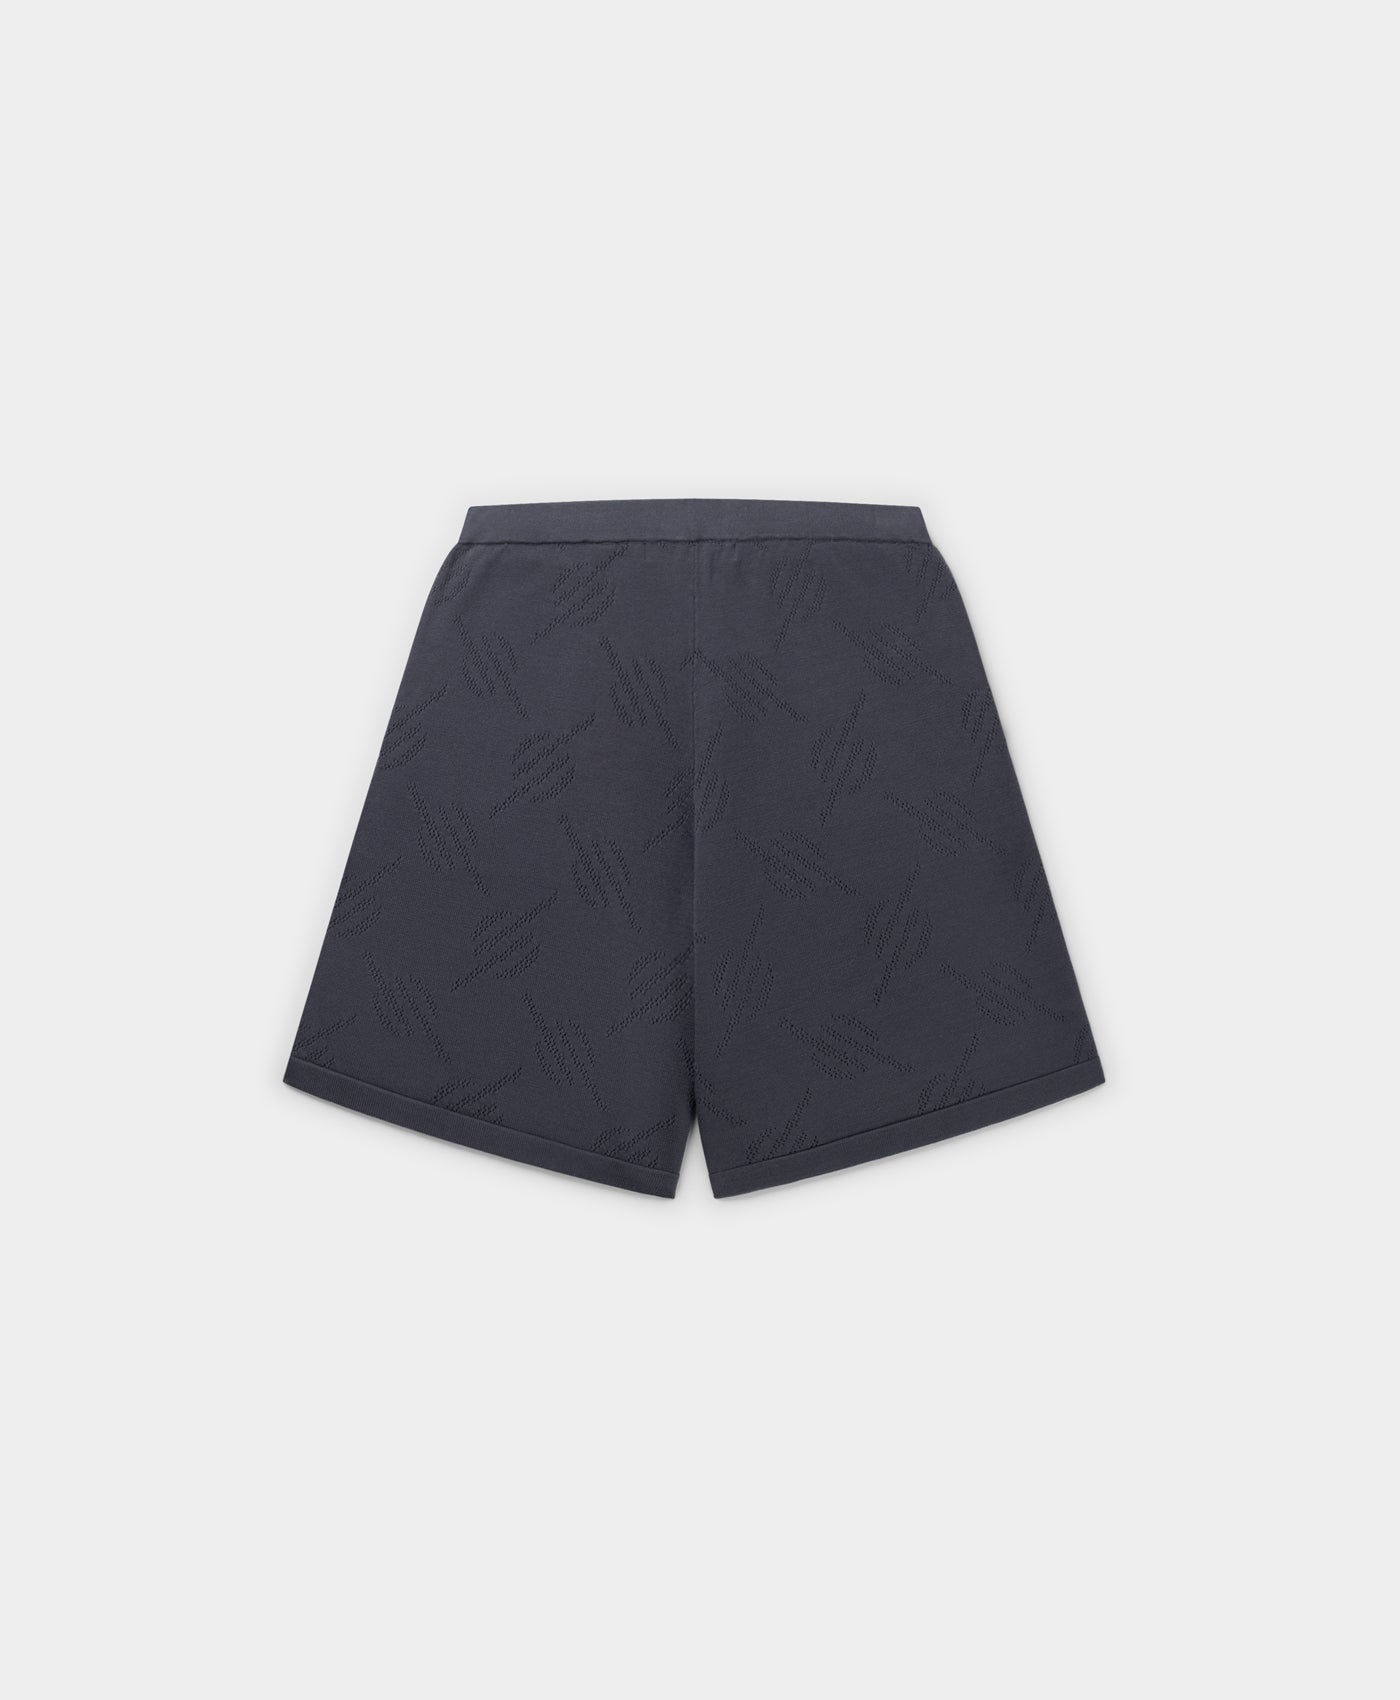 DP - Iron Grey Ralo Shorts - Packshot - Rear